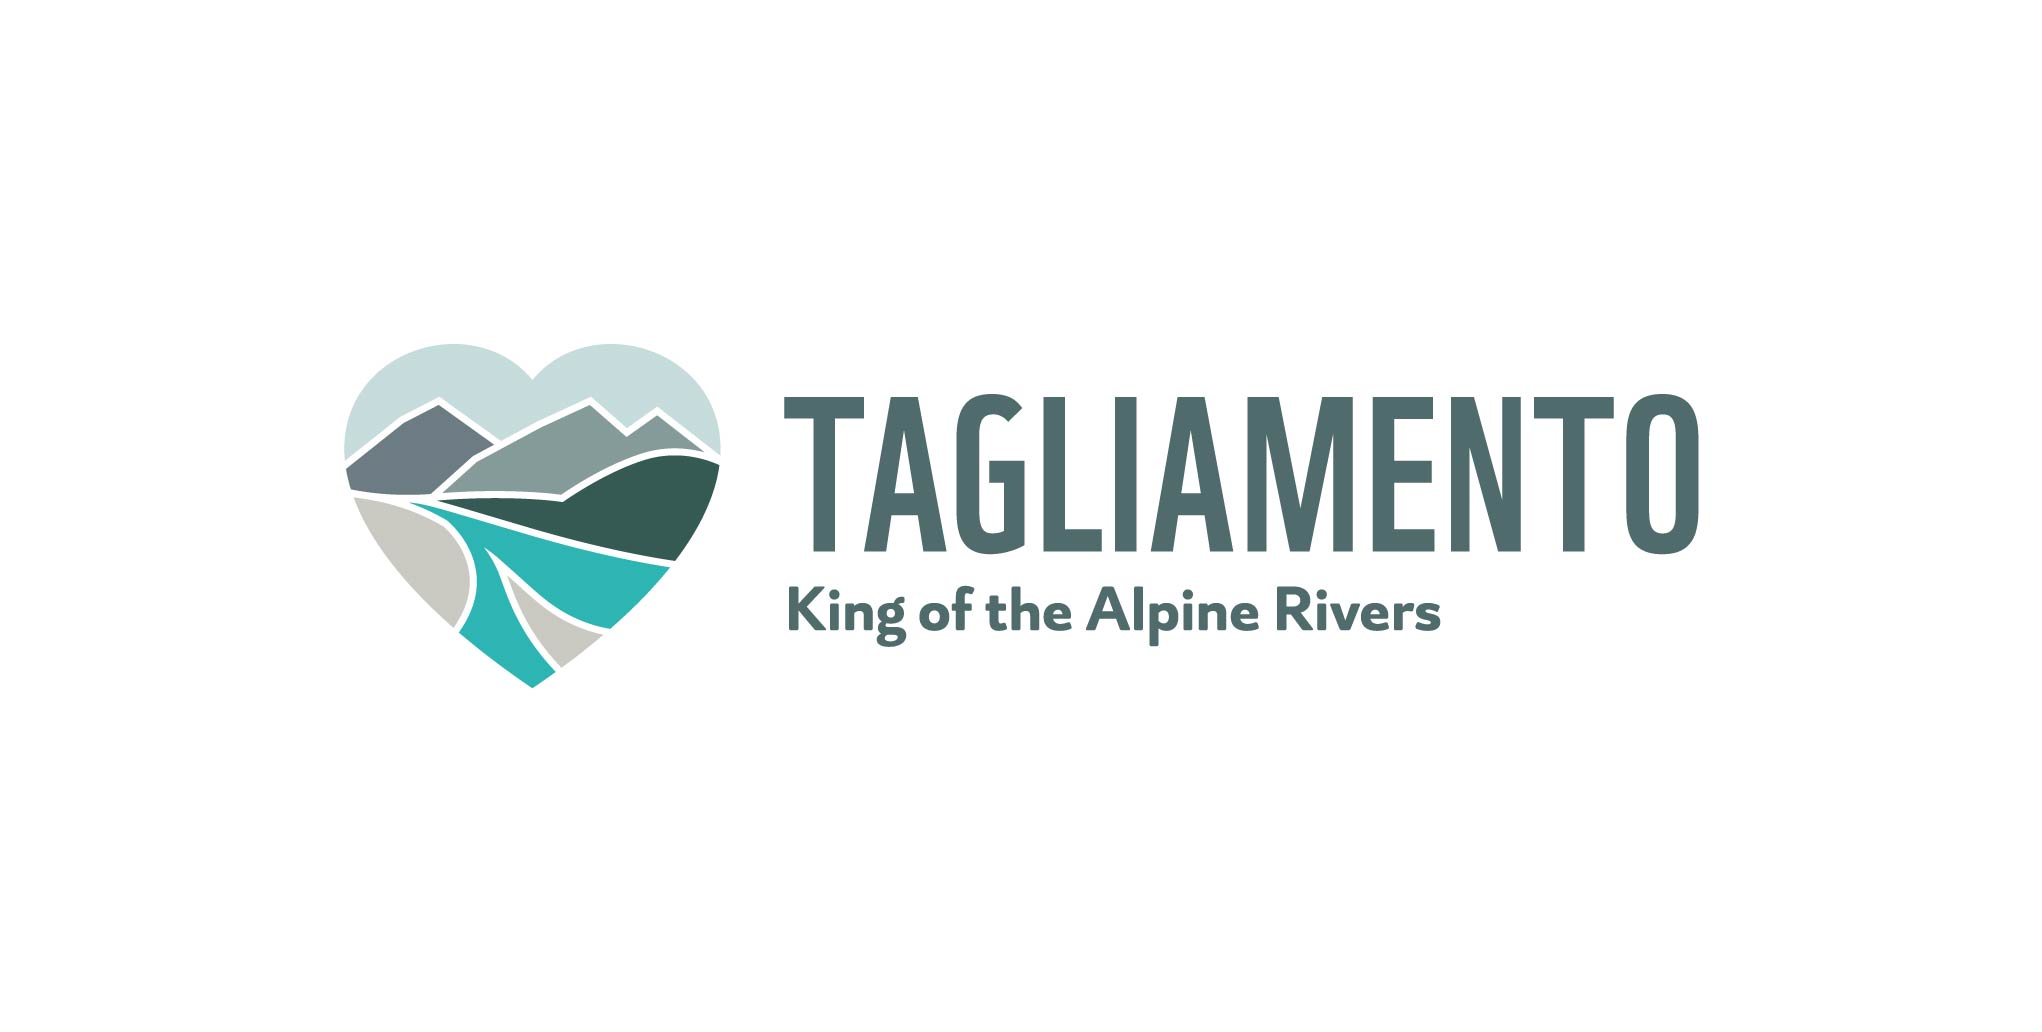 Launch of a Tagliamento river information platform